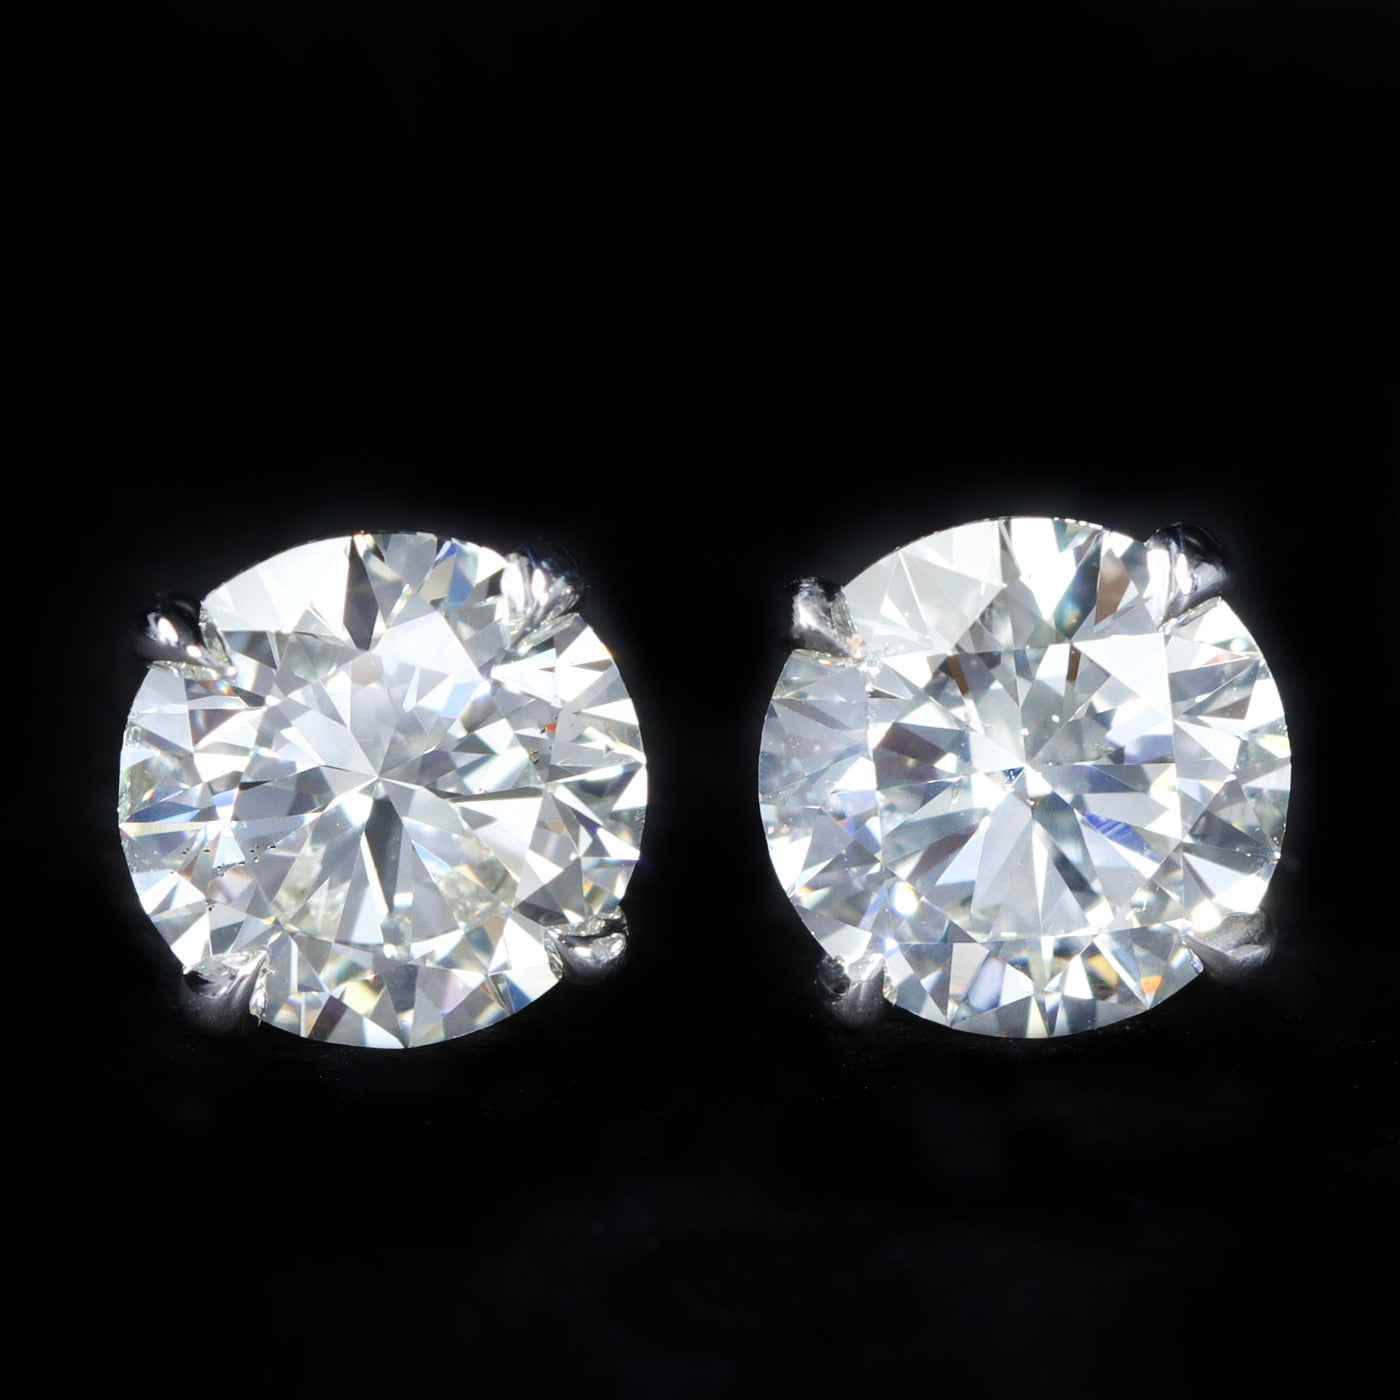 14K White Gold GIA 2.00 CTW Diamond Stud Earrings